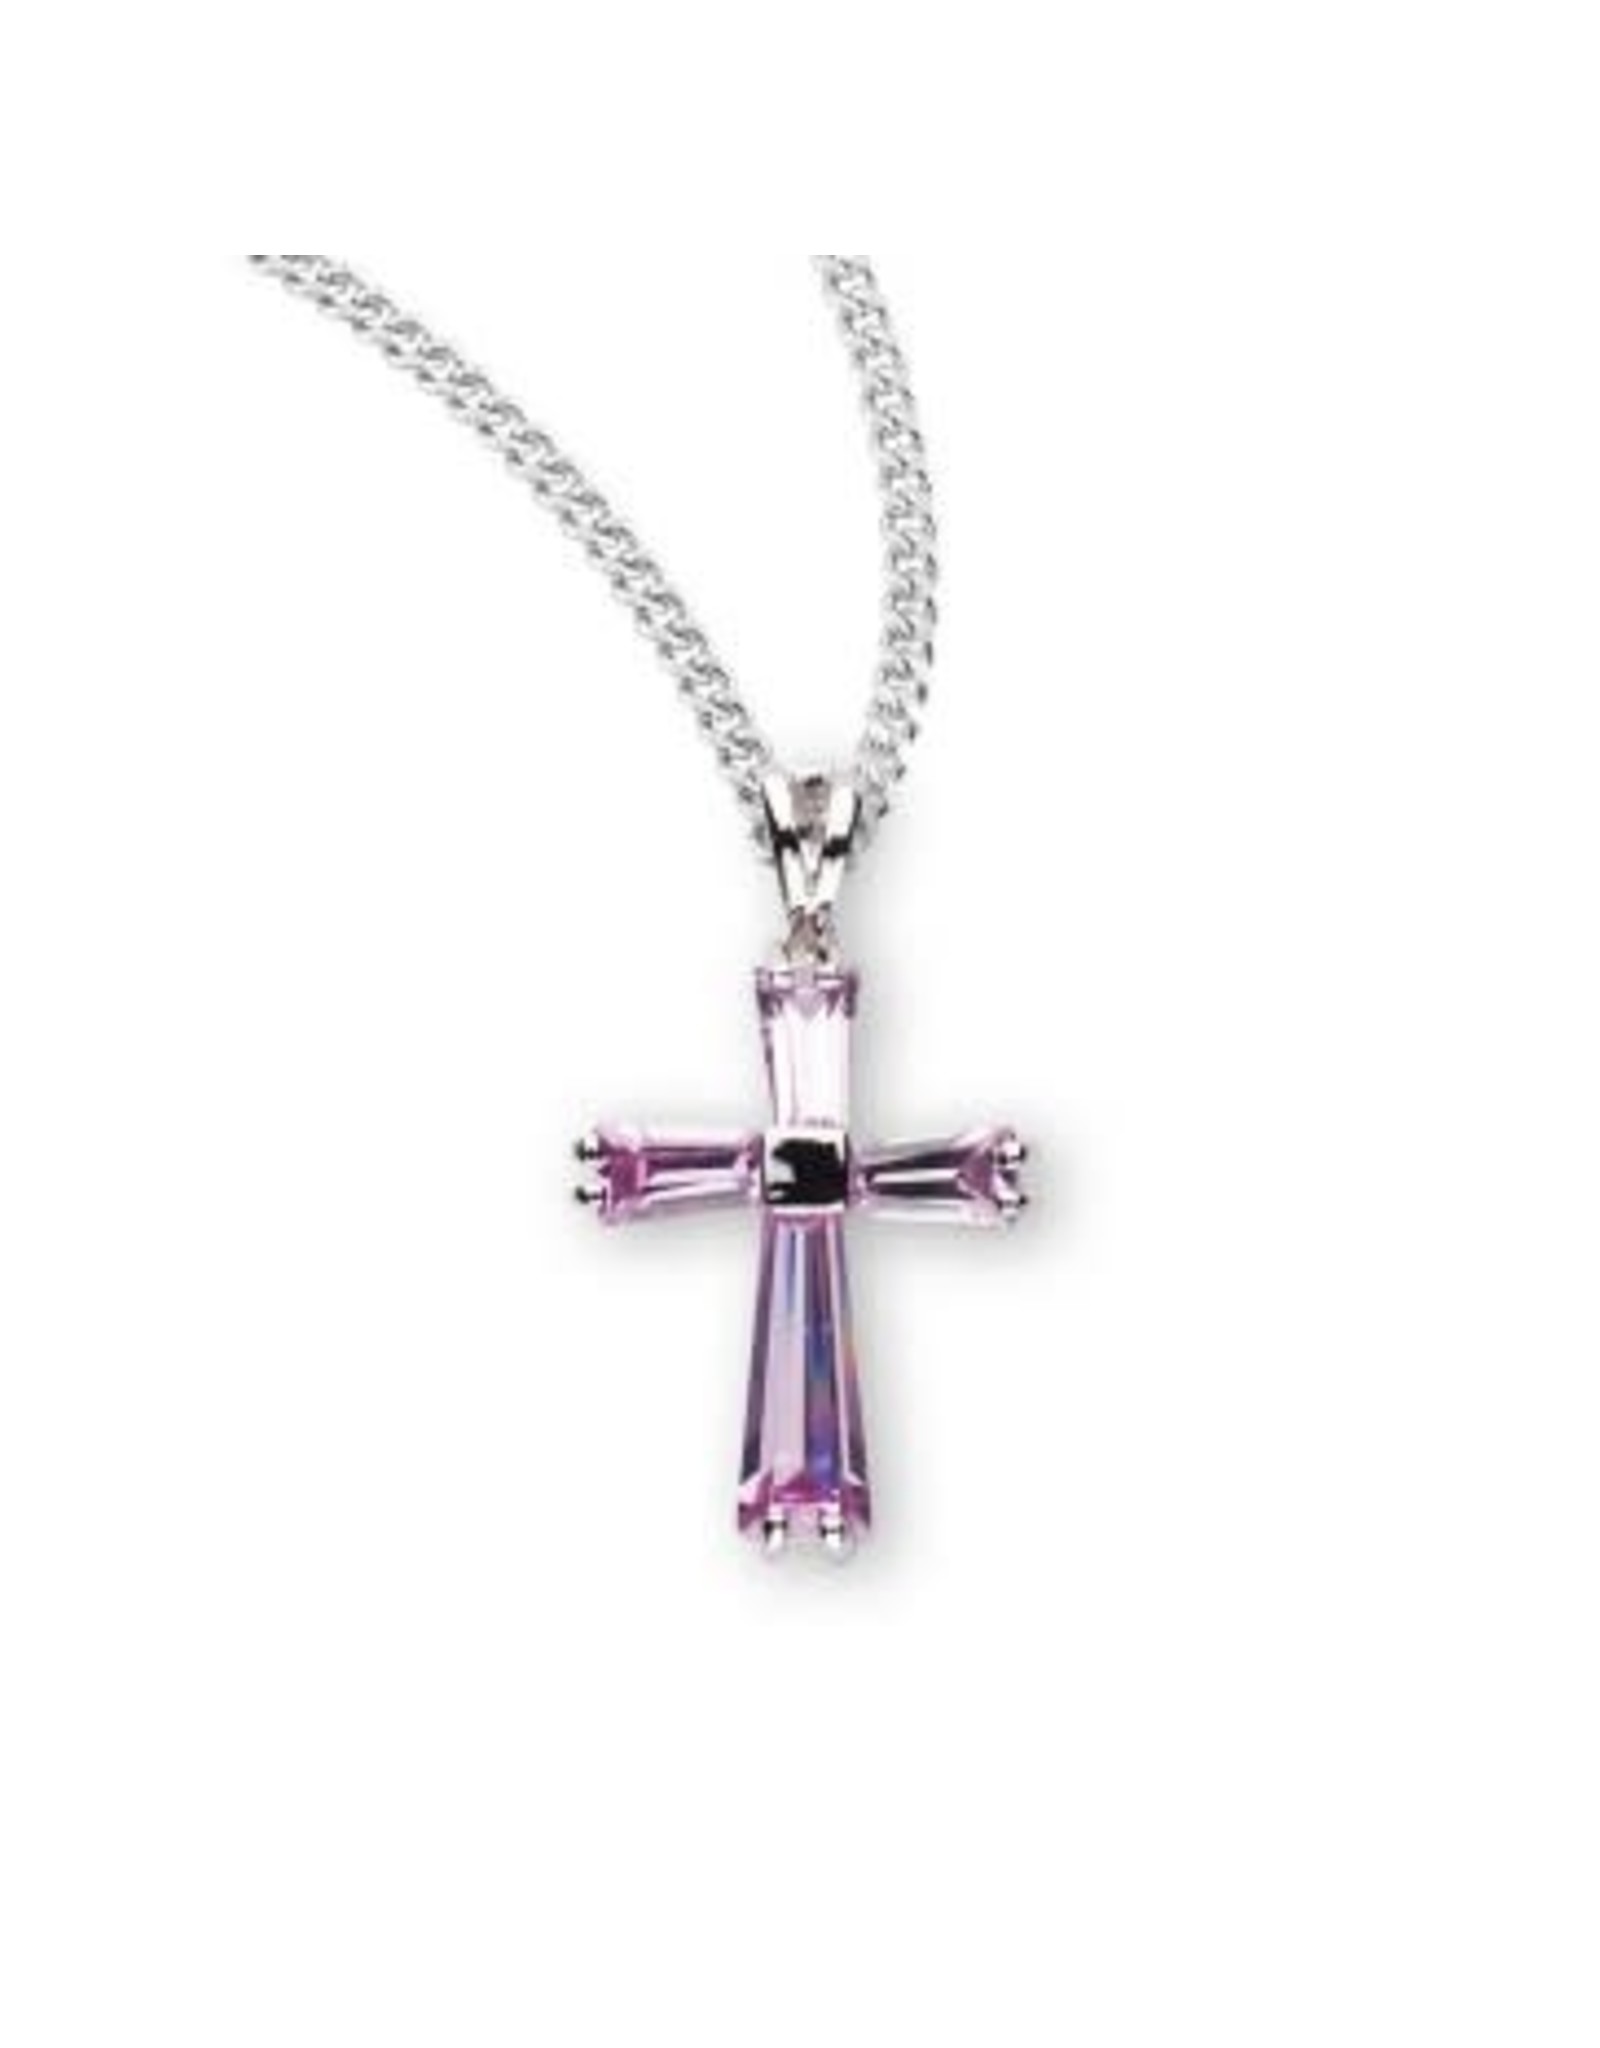 HMH Cross Necklace, Pink Zircon, Sterling Silver, 18" Chain